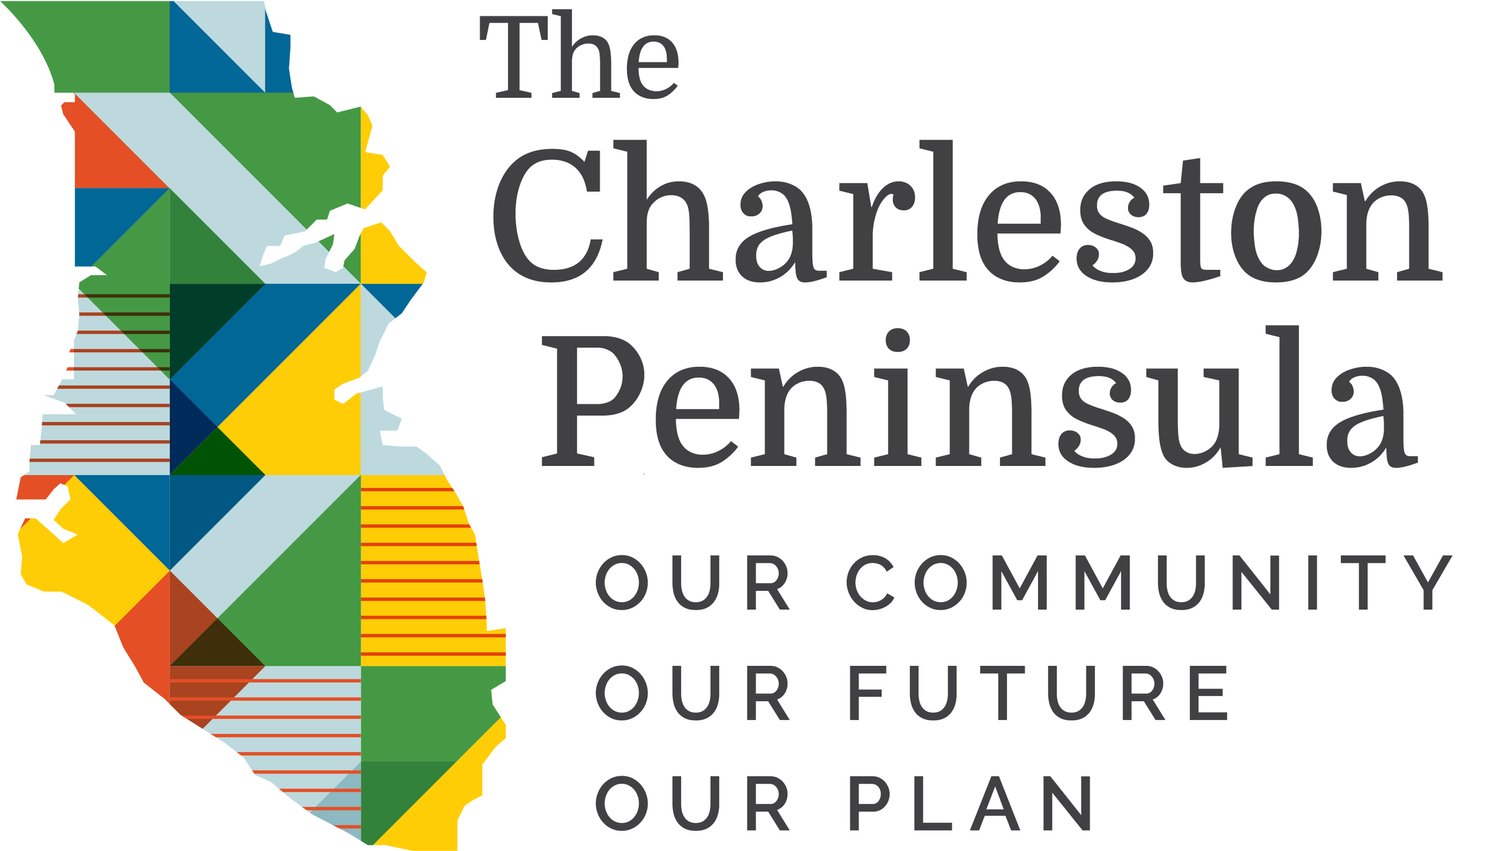 The Charleston Peninsula Plan